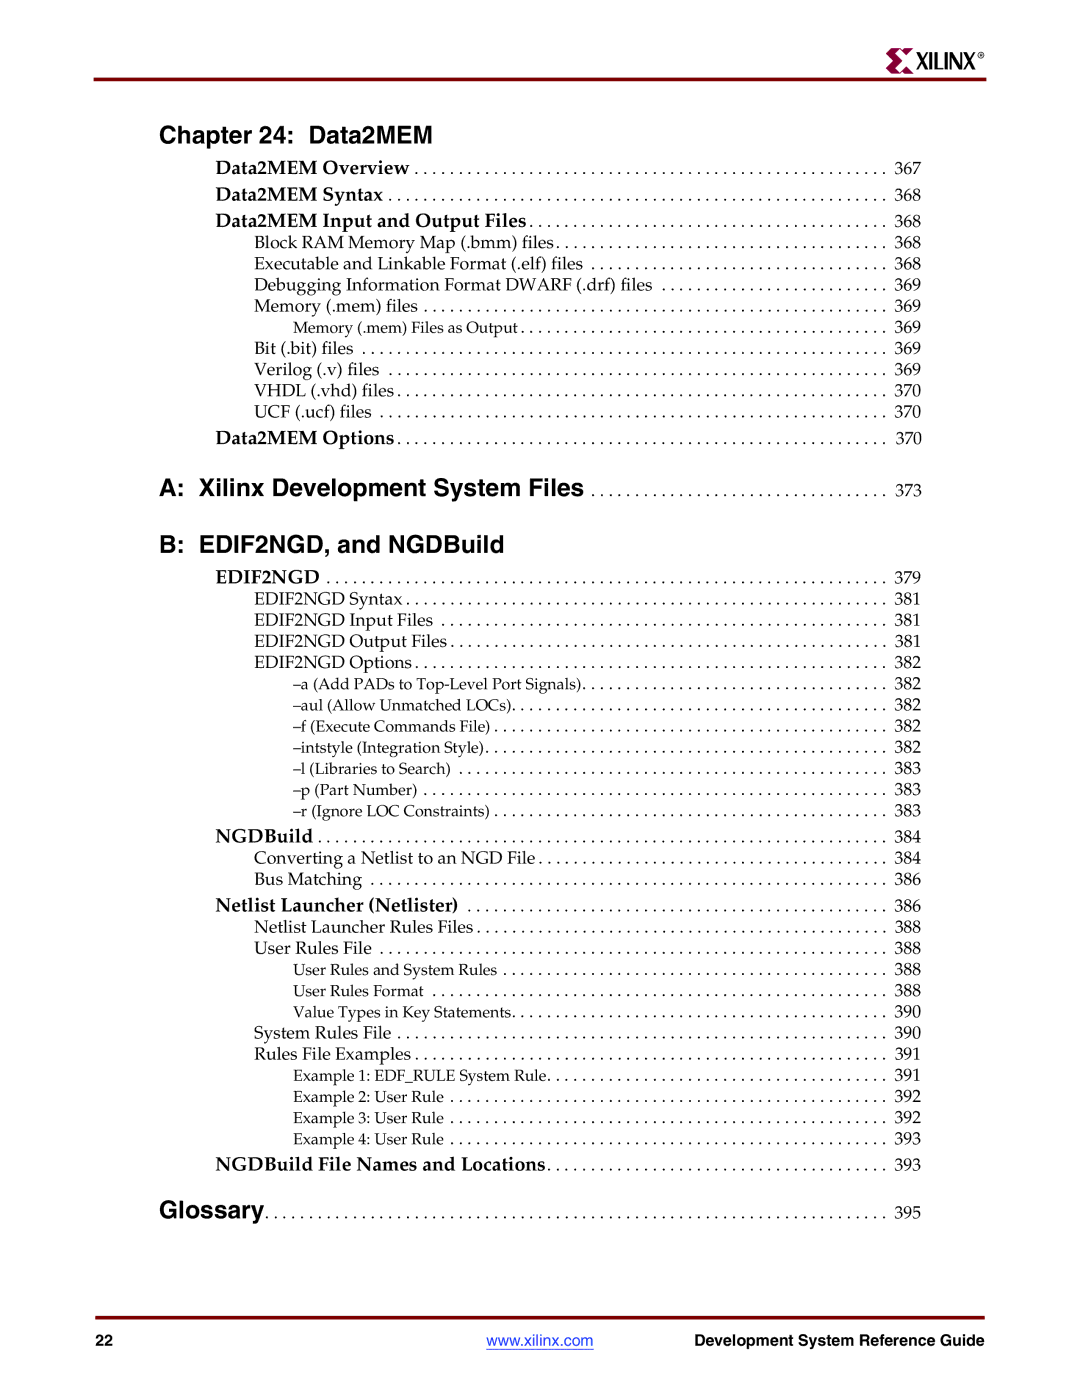 Xilinx 8.2i manual Data2MEM, EDIF2NGD, and NGDBuild 